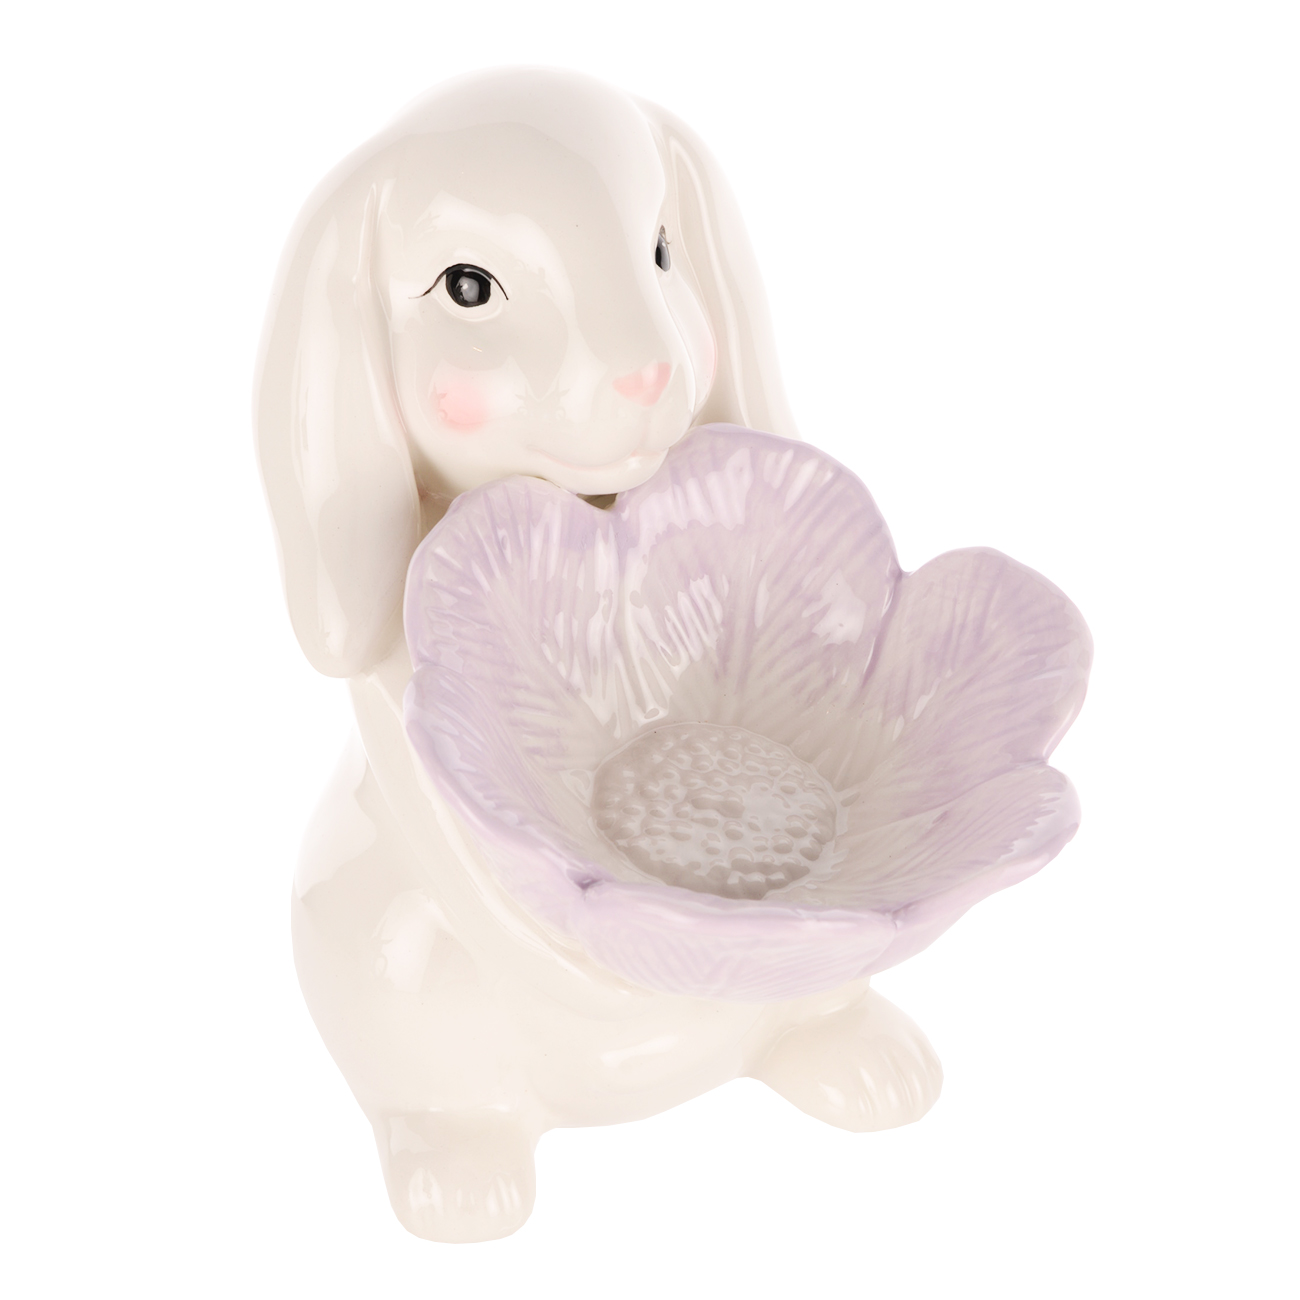 Пиала, 13х20 см, на ножке, керамика, белая, Кролик с цветком, Easter